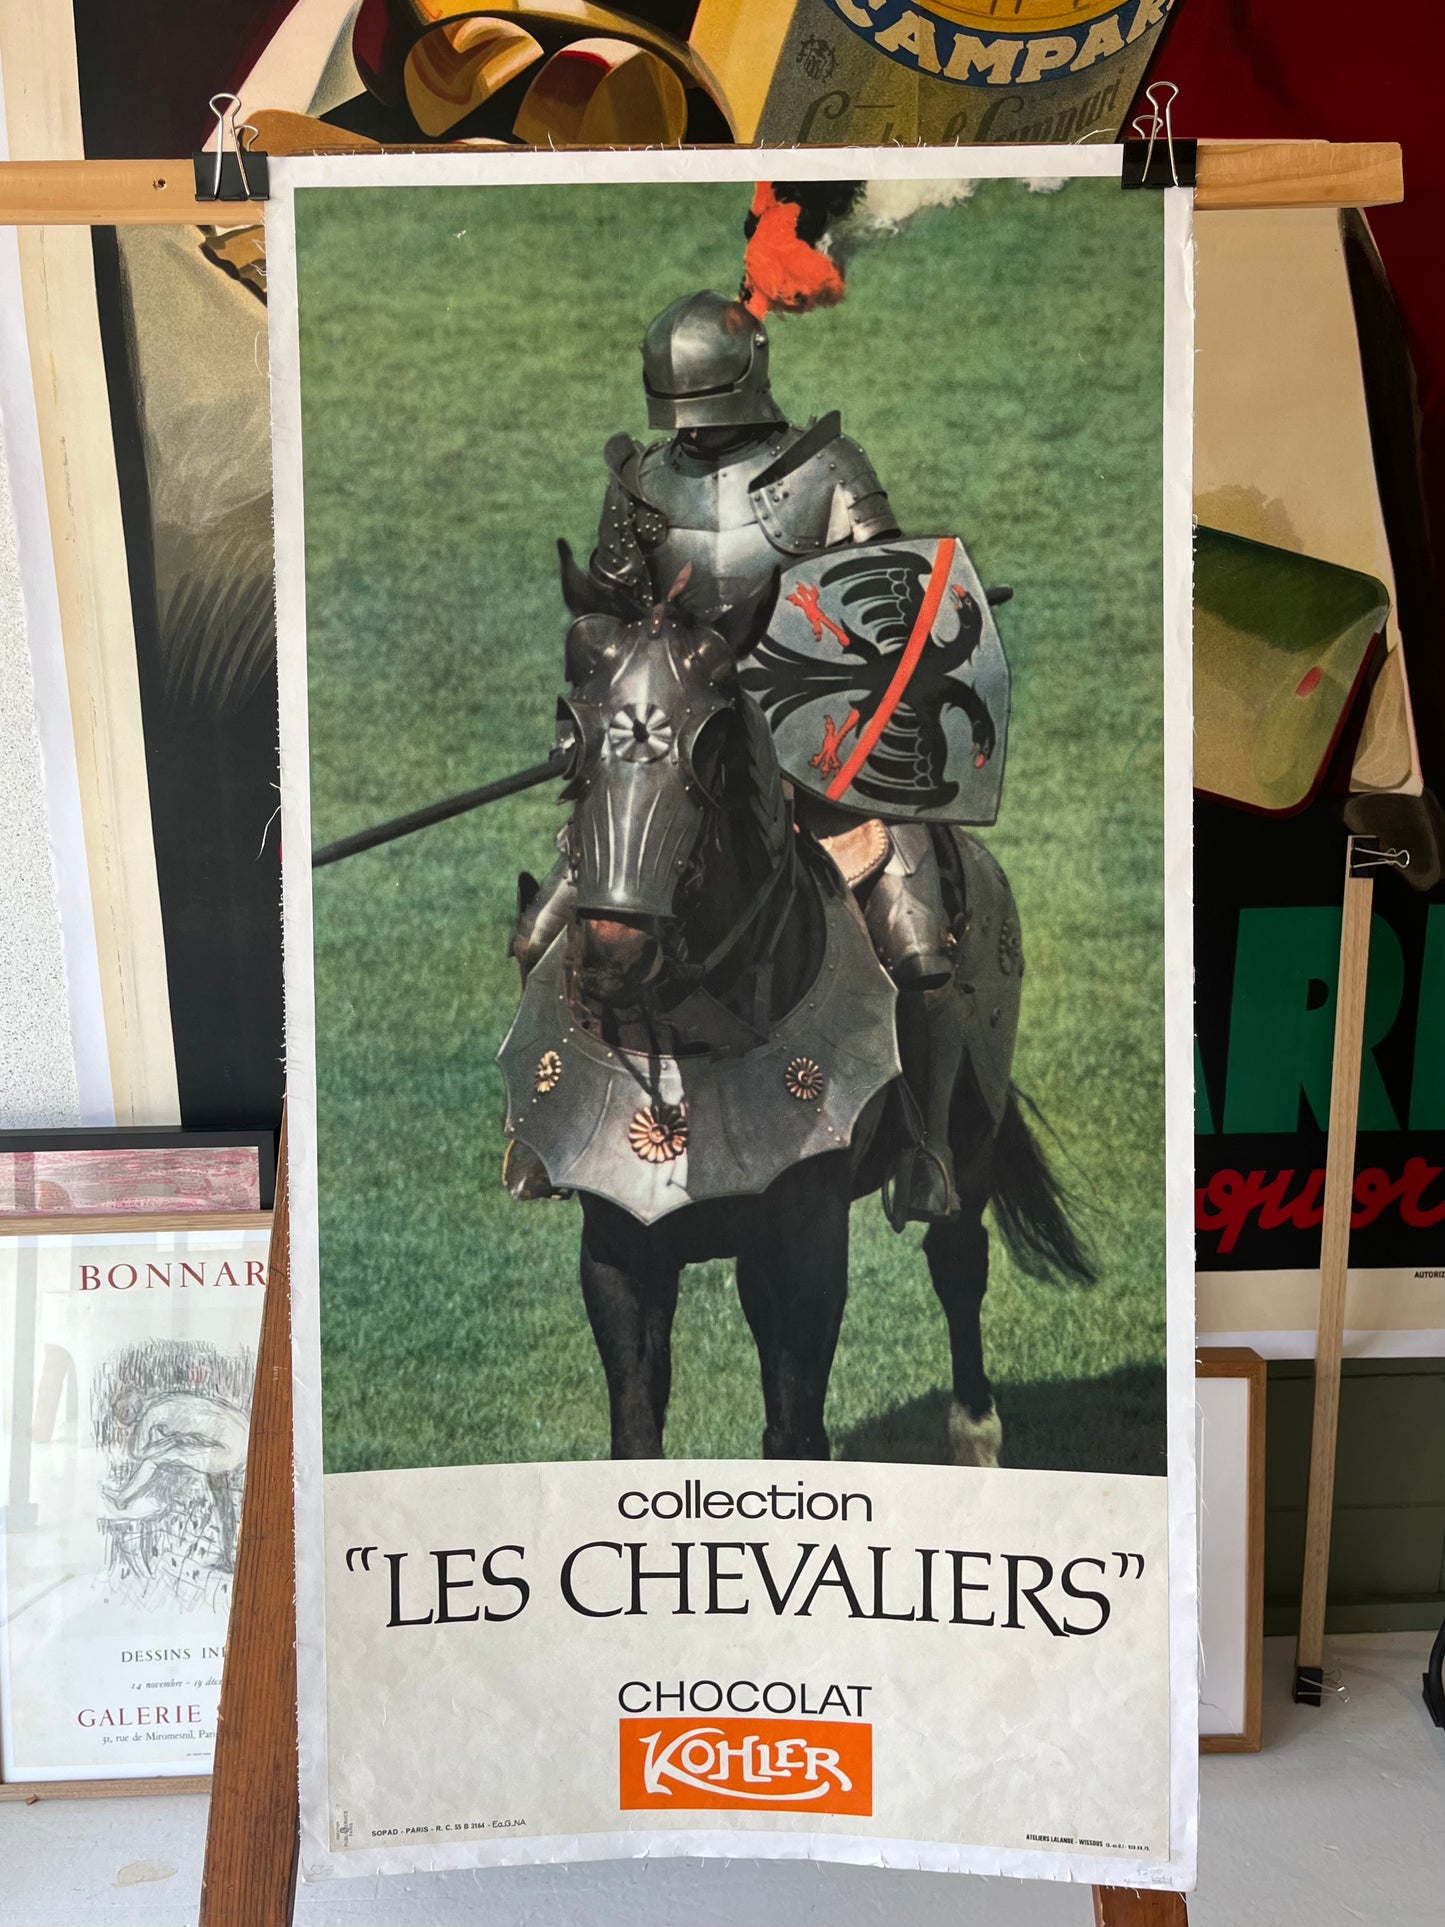 Les Chevaliers by Kohler